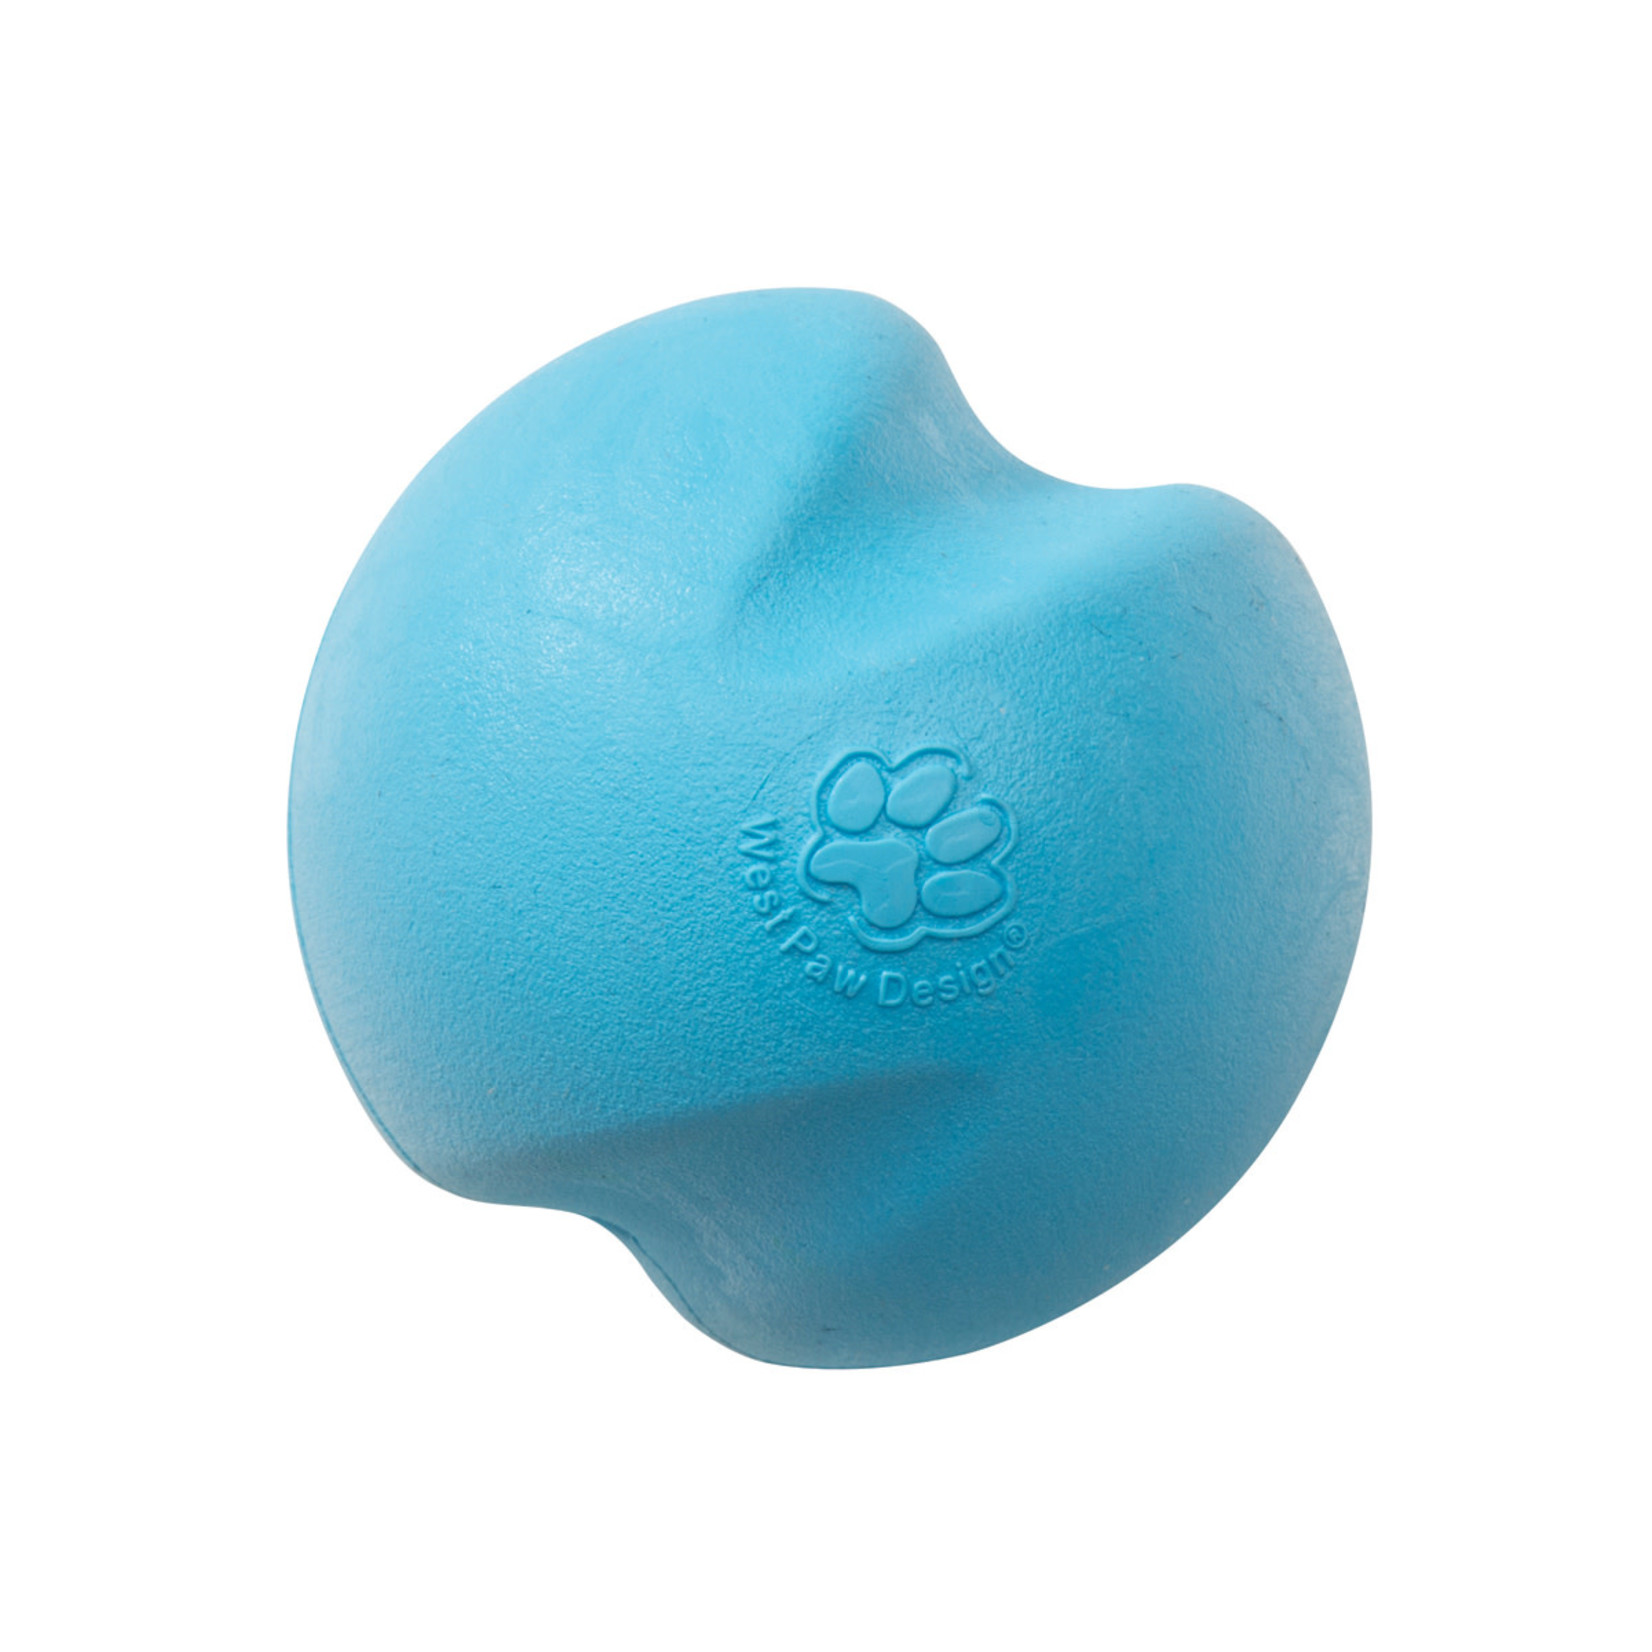 Jive XS ball 2" - Aqua Blue dog toy